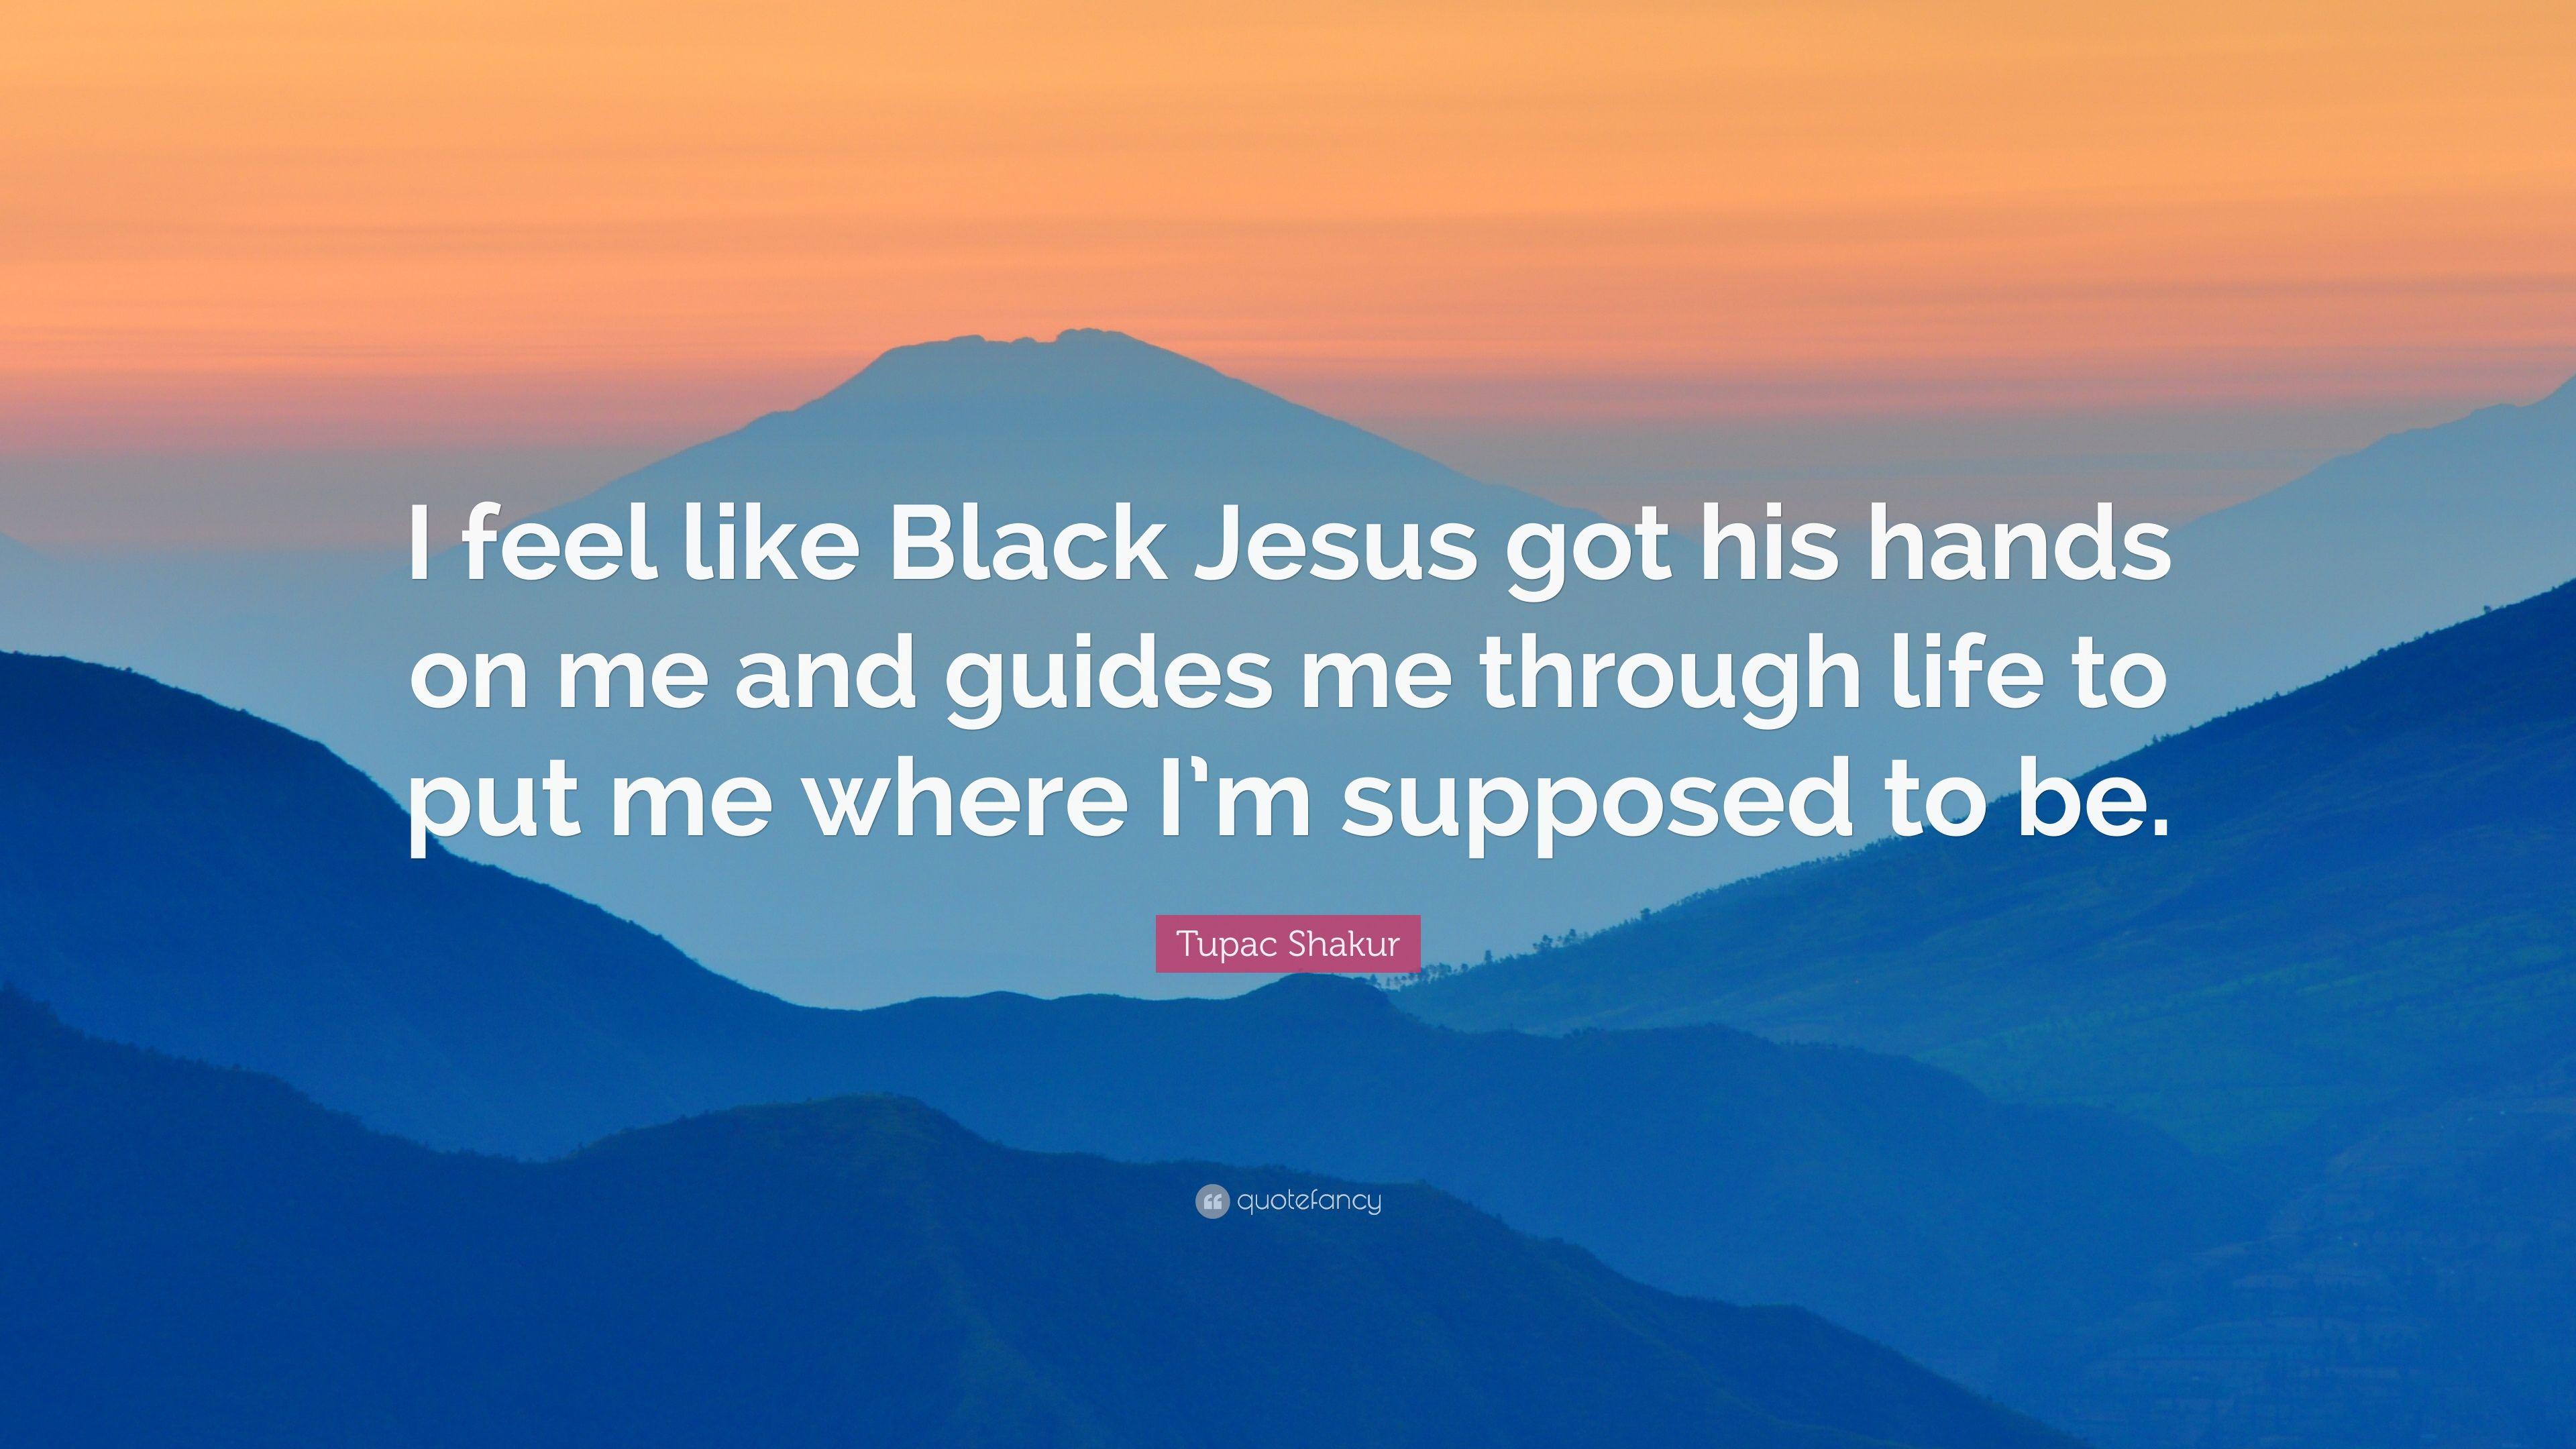 Tupac Shakur Quote: “I feel like Black Jesus got his hands on me